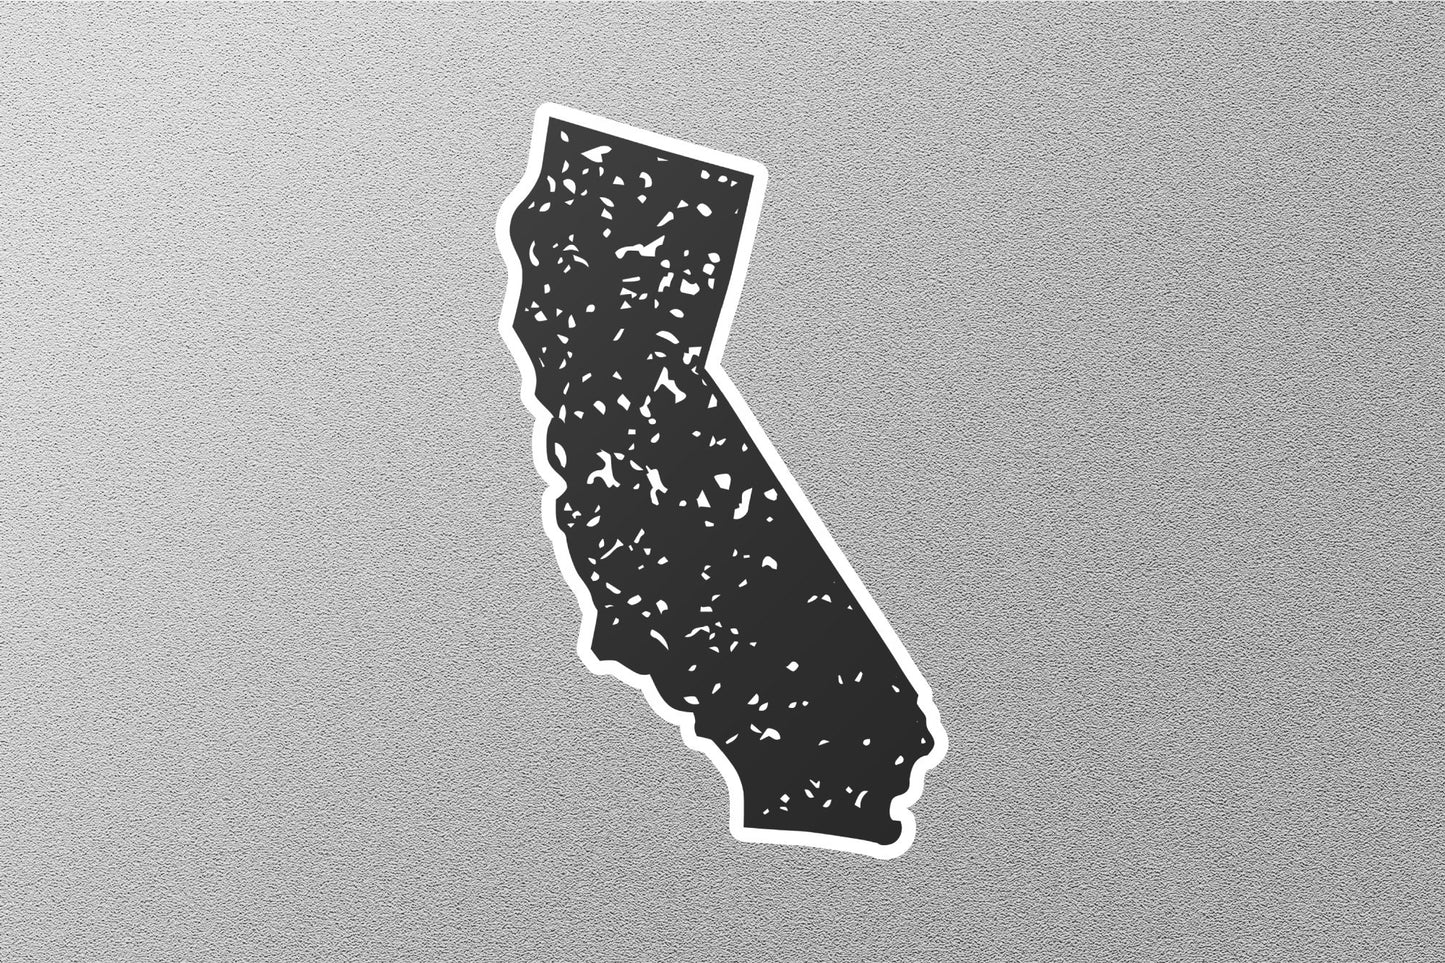 California 6 State Sticker